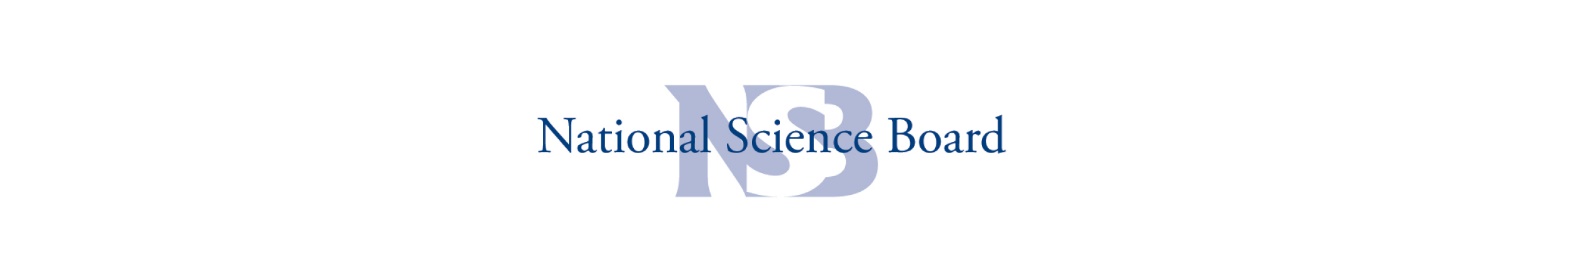 nsb-header-logo